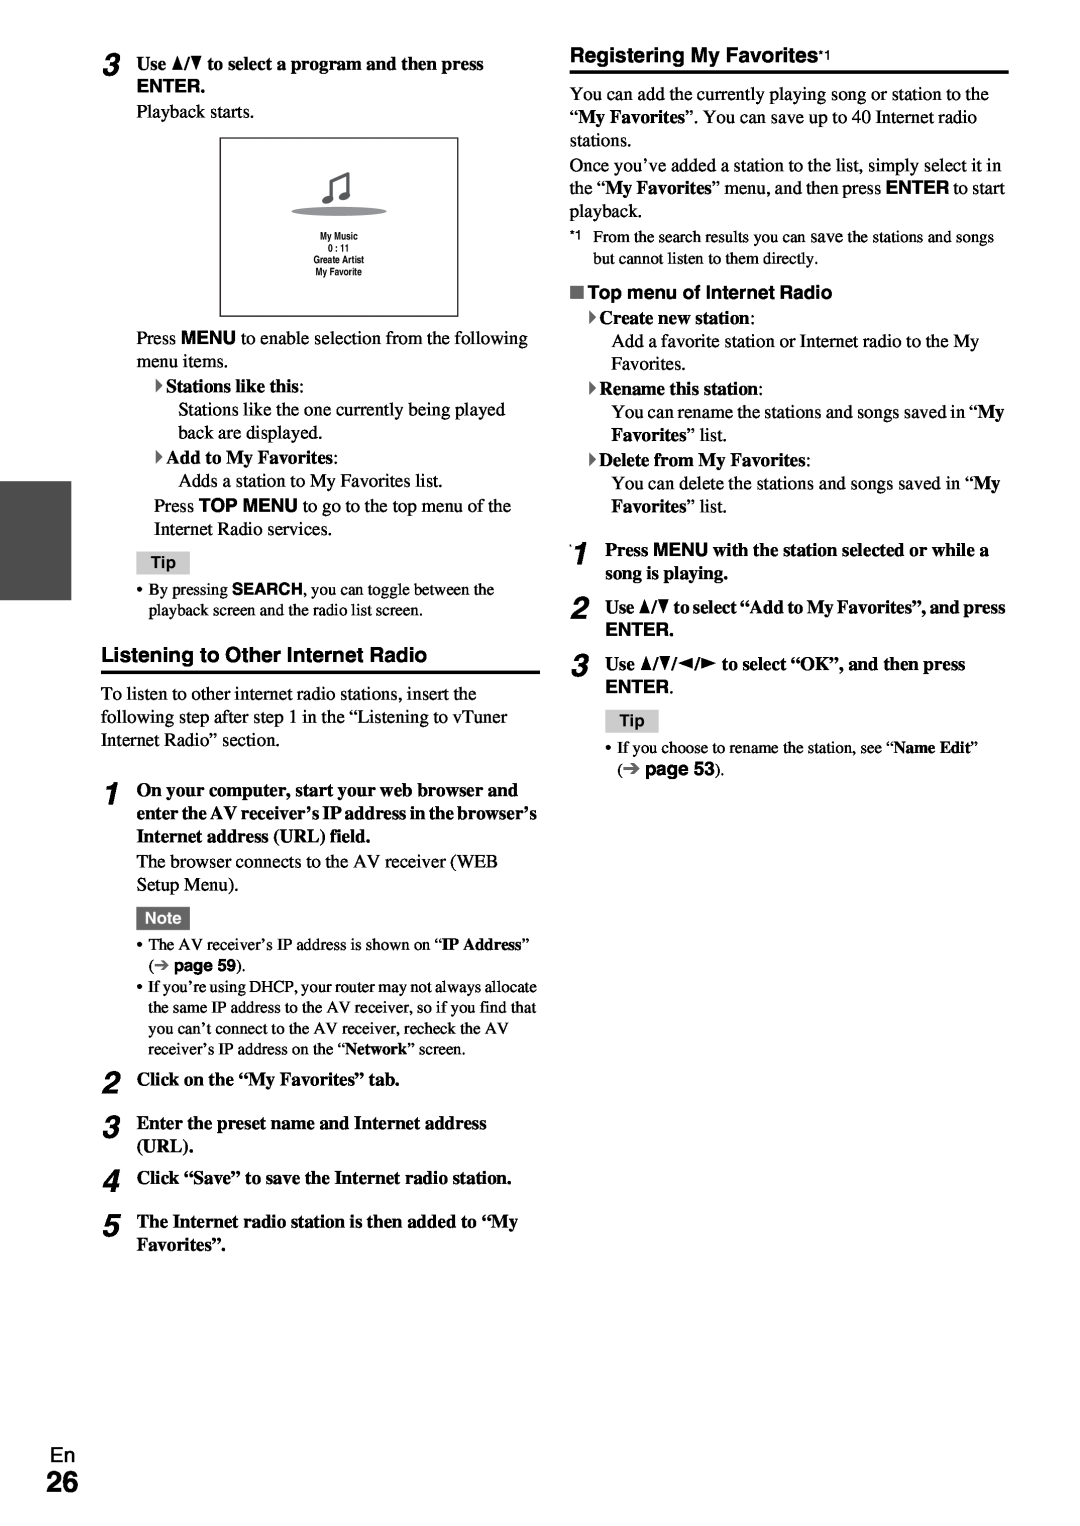 Onkyo HT-RC370 instruction manual Enter, Top menu of Internet Radio, page 